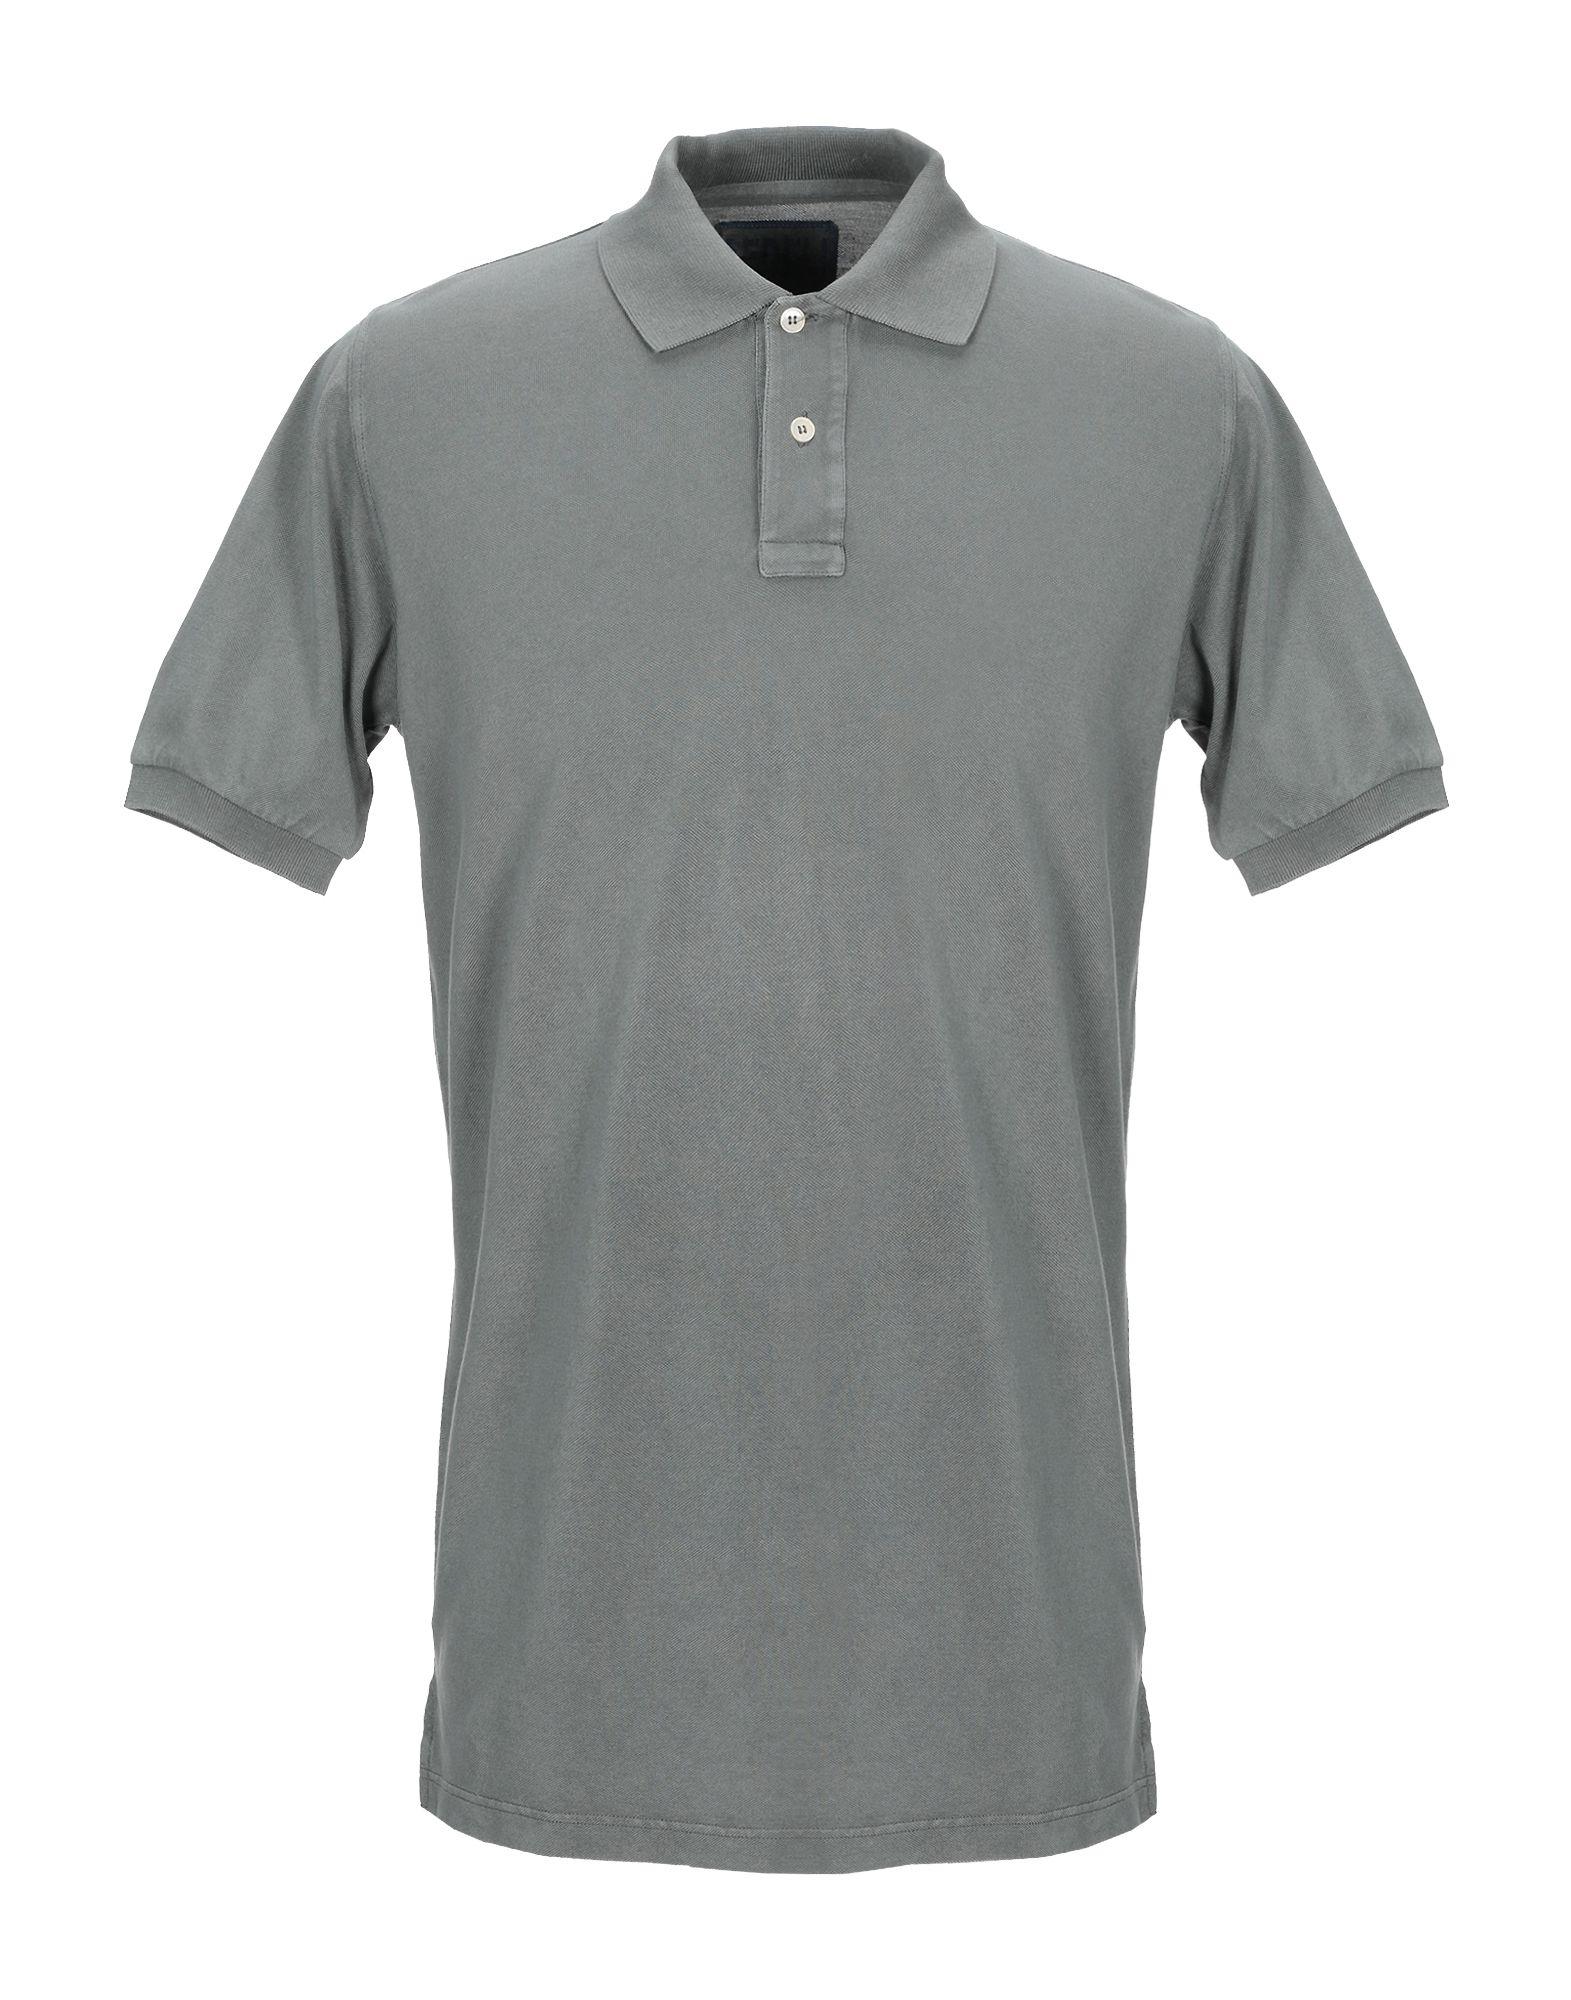 Fedeli Polo Shirt in Gray for Men - Lyst